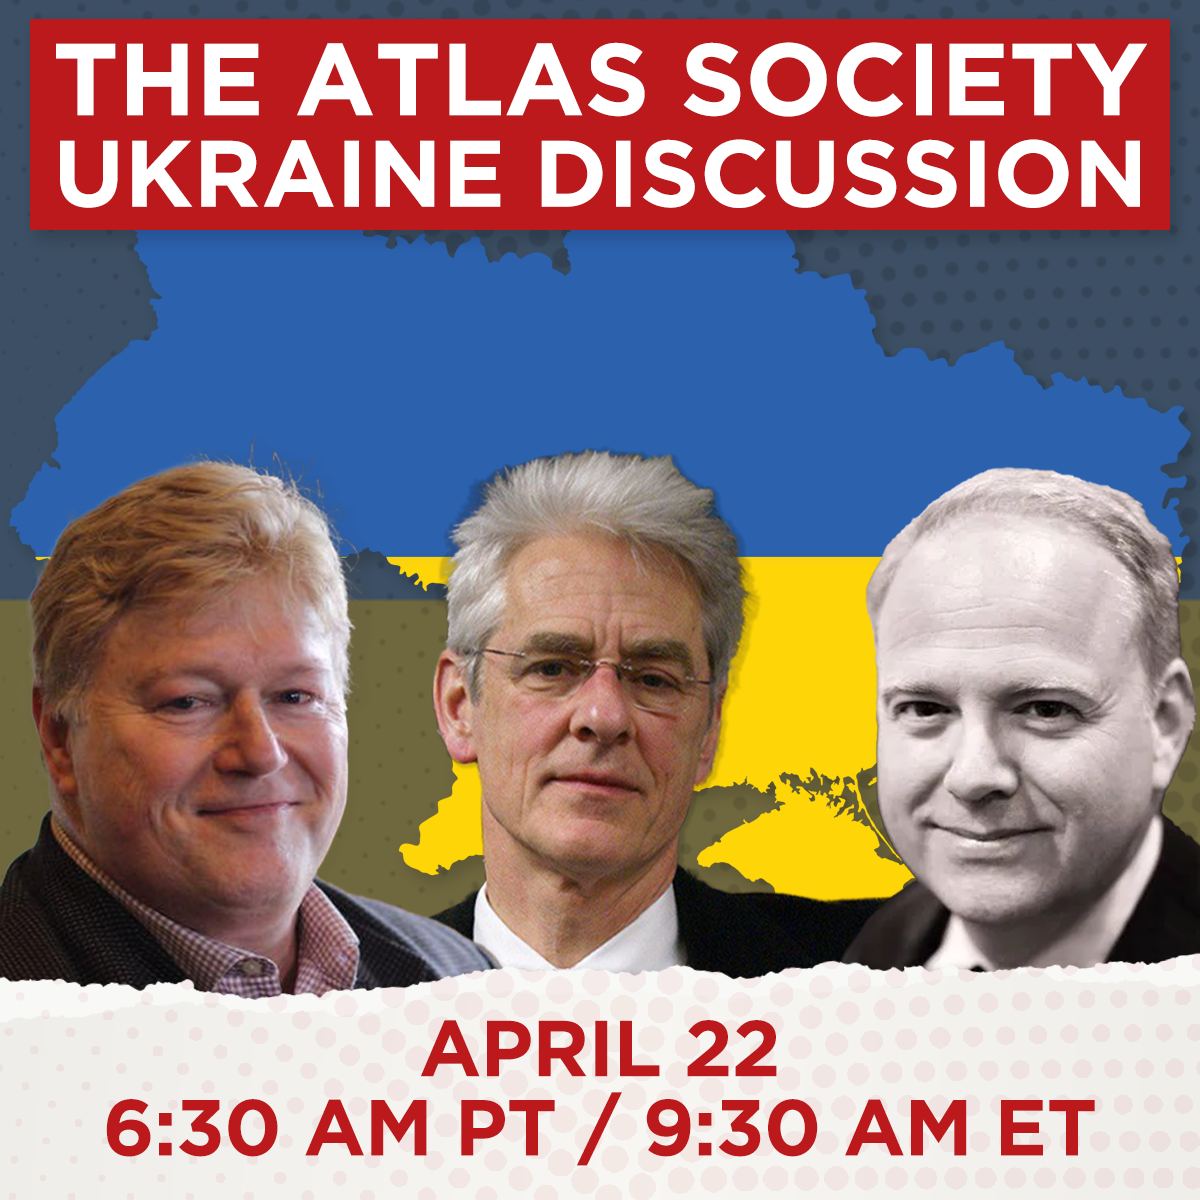 The Atlas Society Ukraine Discussion with David Kelley, Richard Salsman, and Robert Tracinski